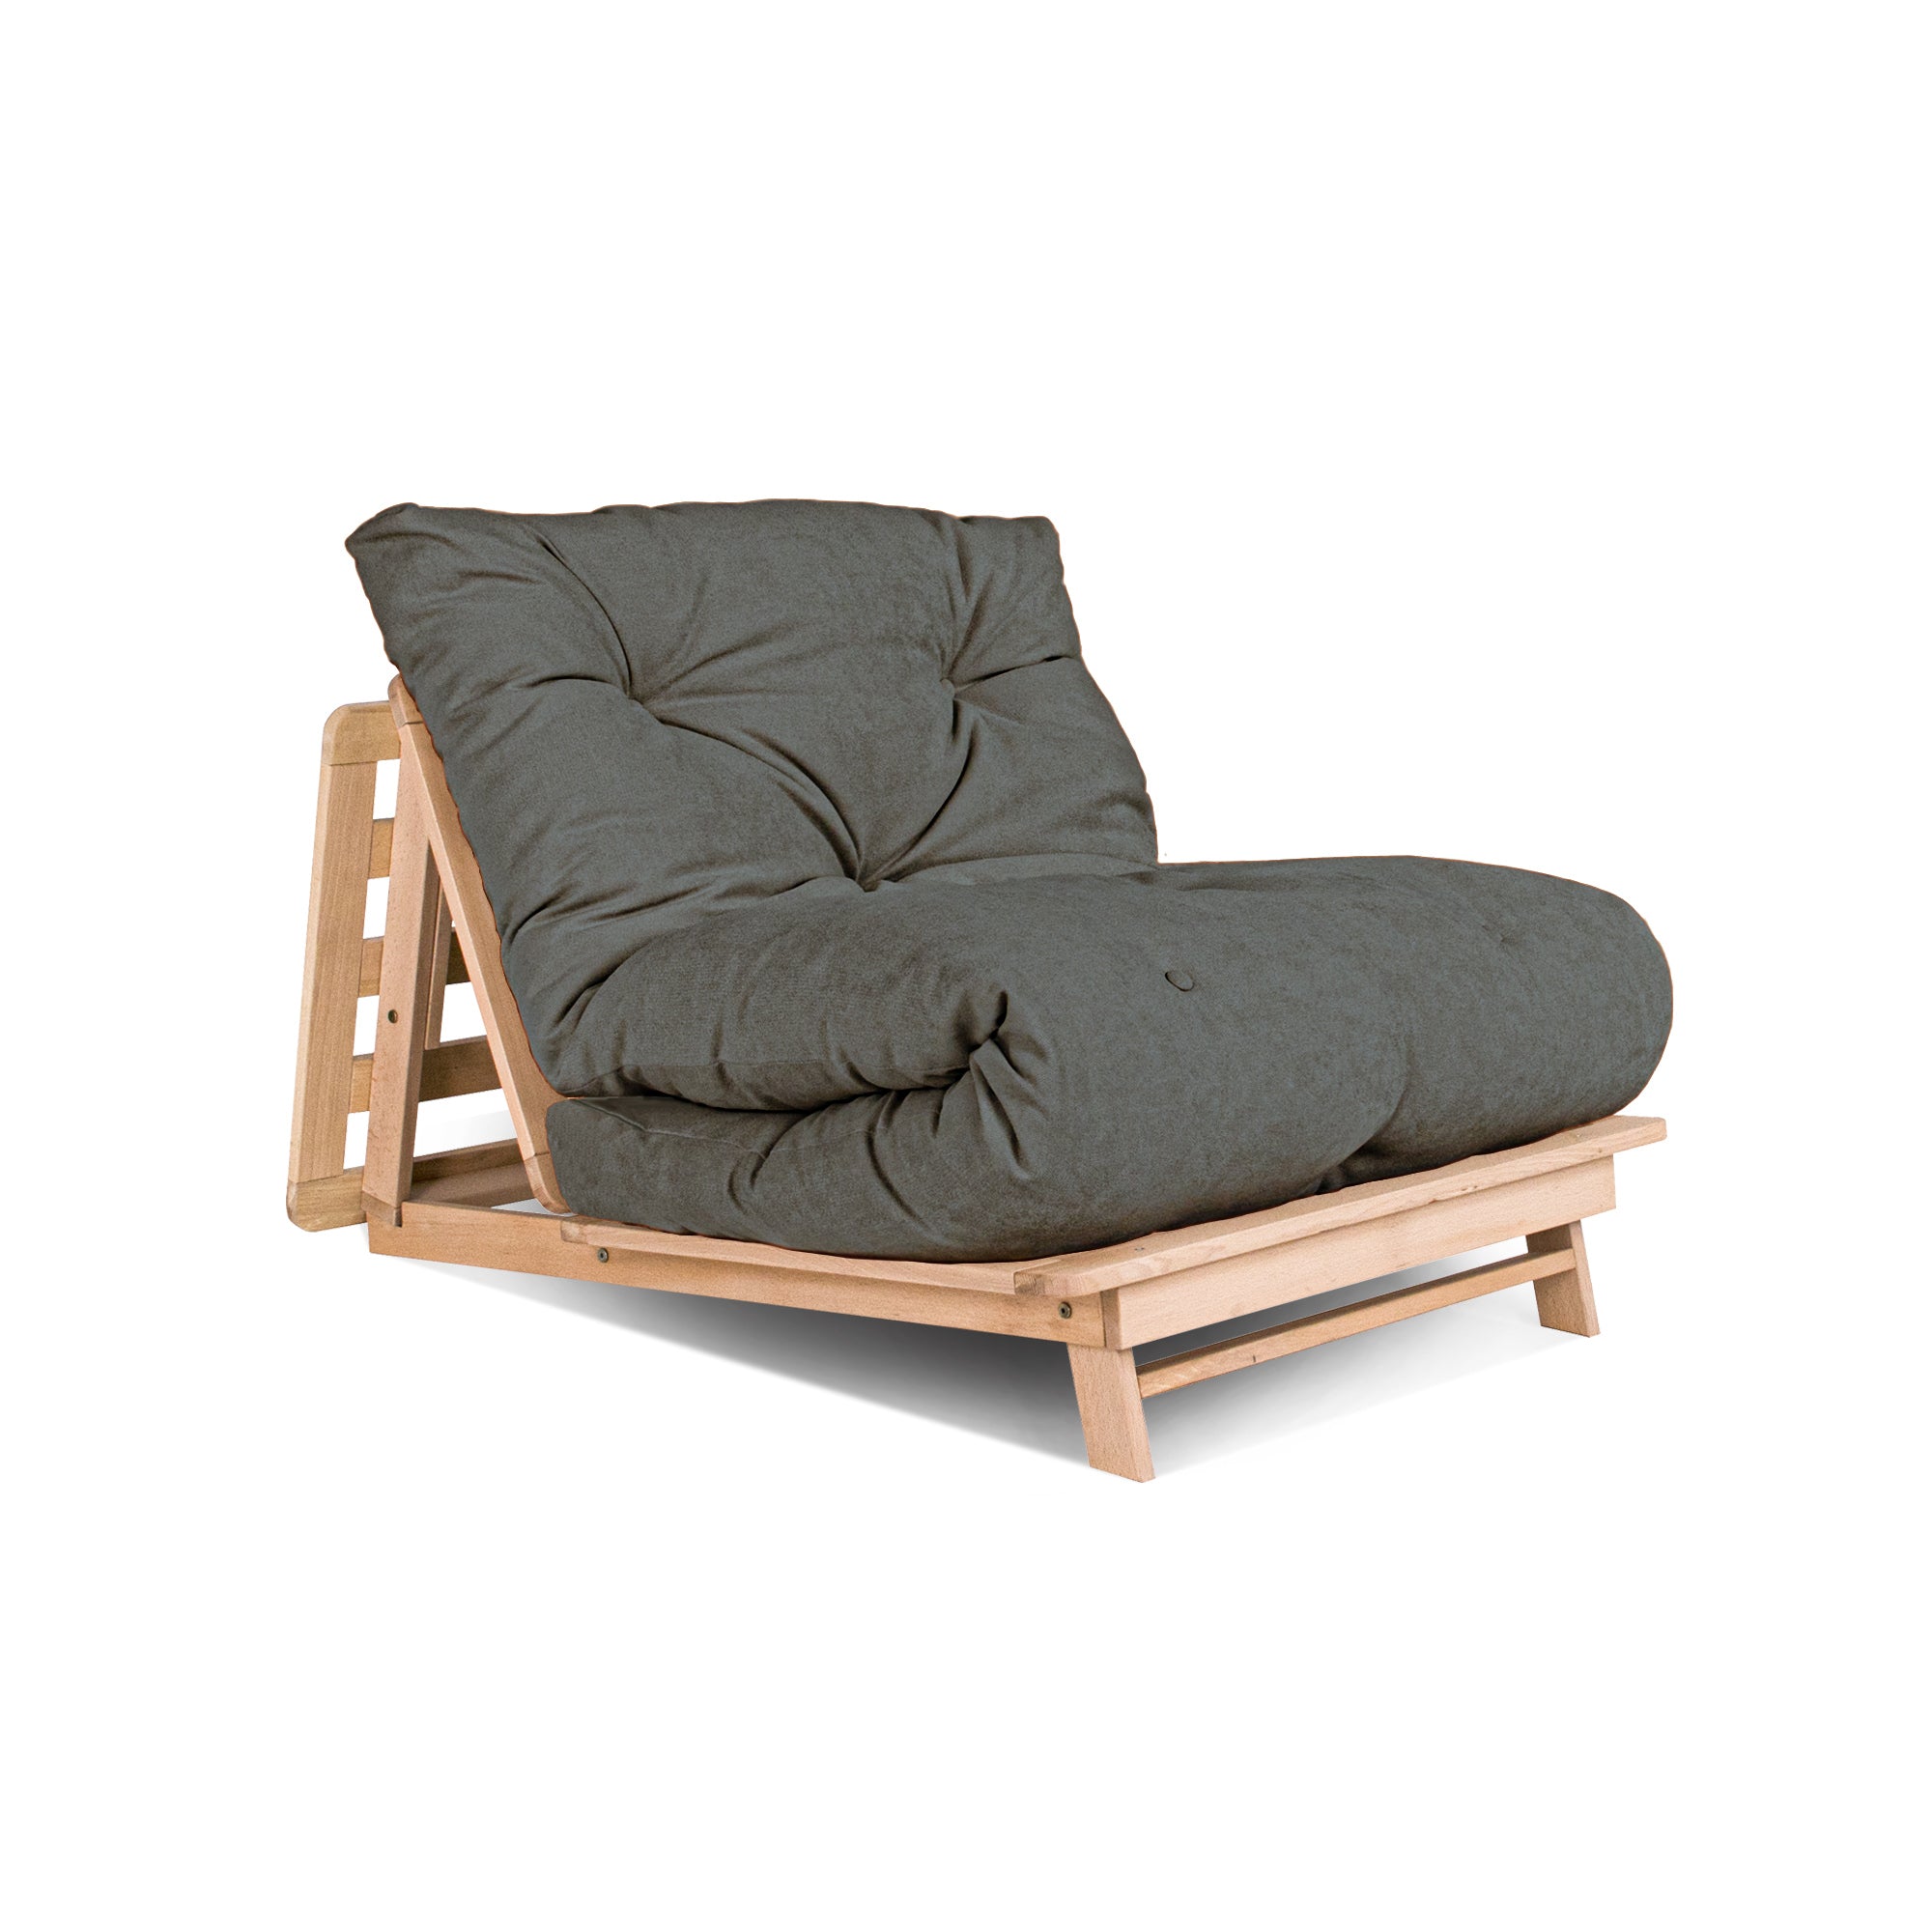 LAYTI-90 Futon Chair, Beech Wood Frame, Natural Colour-gray fabric